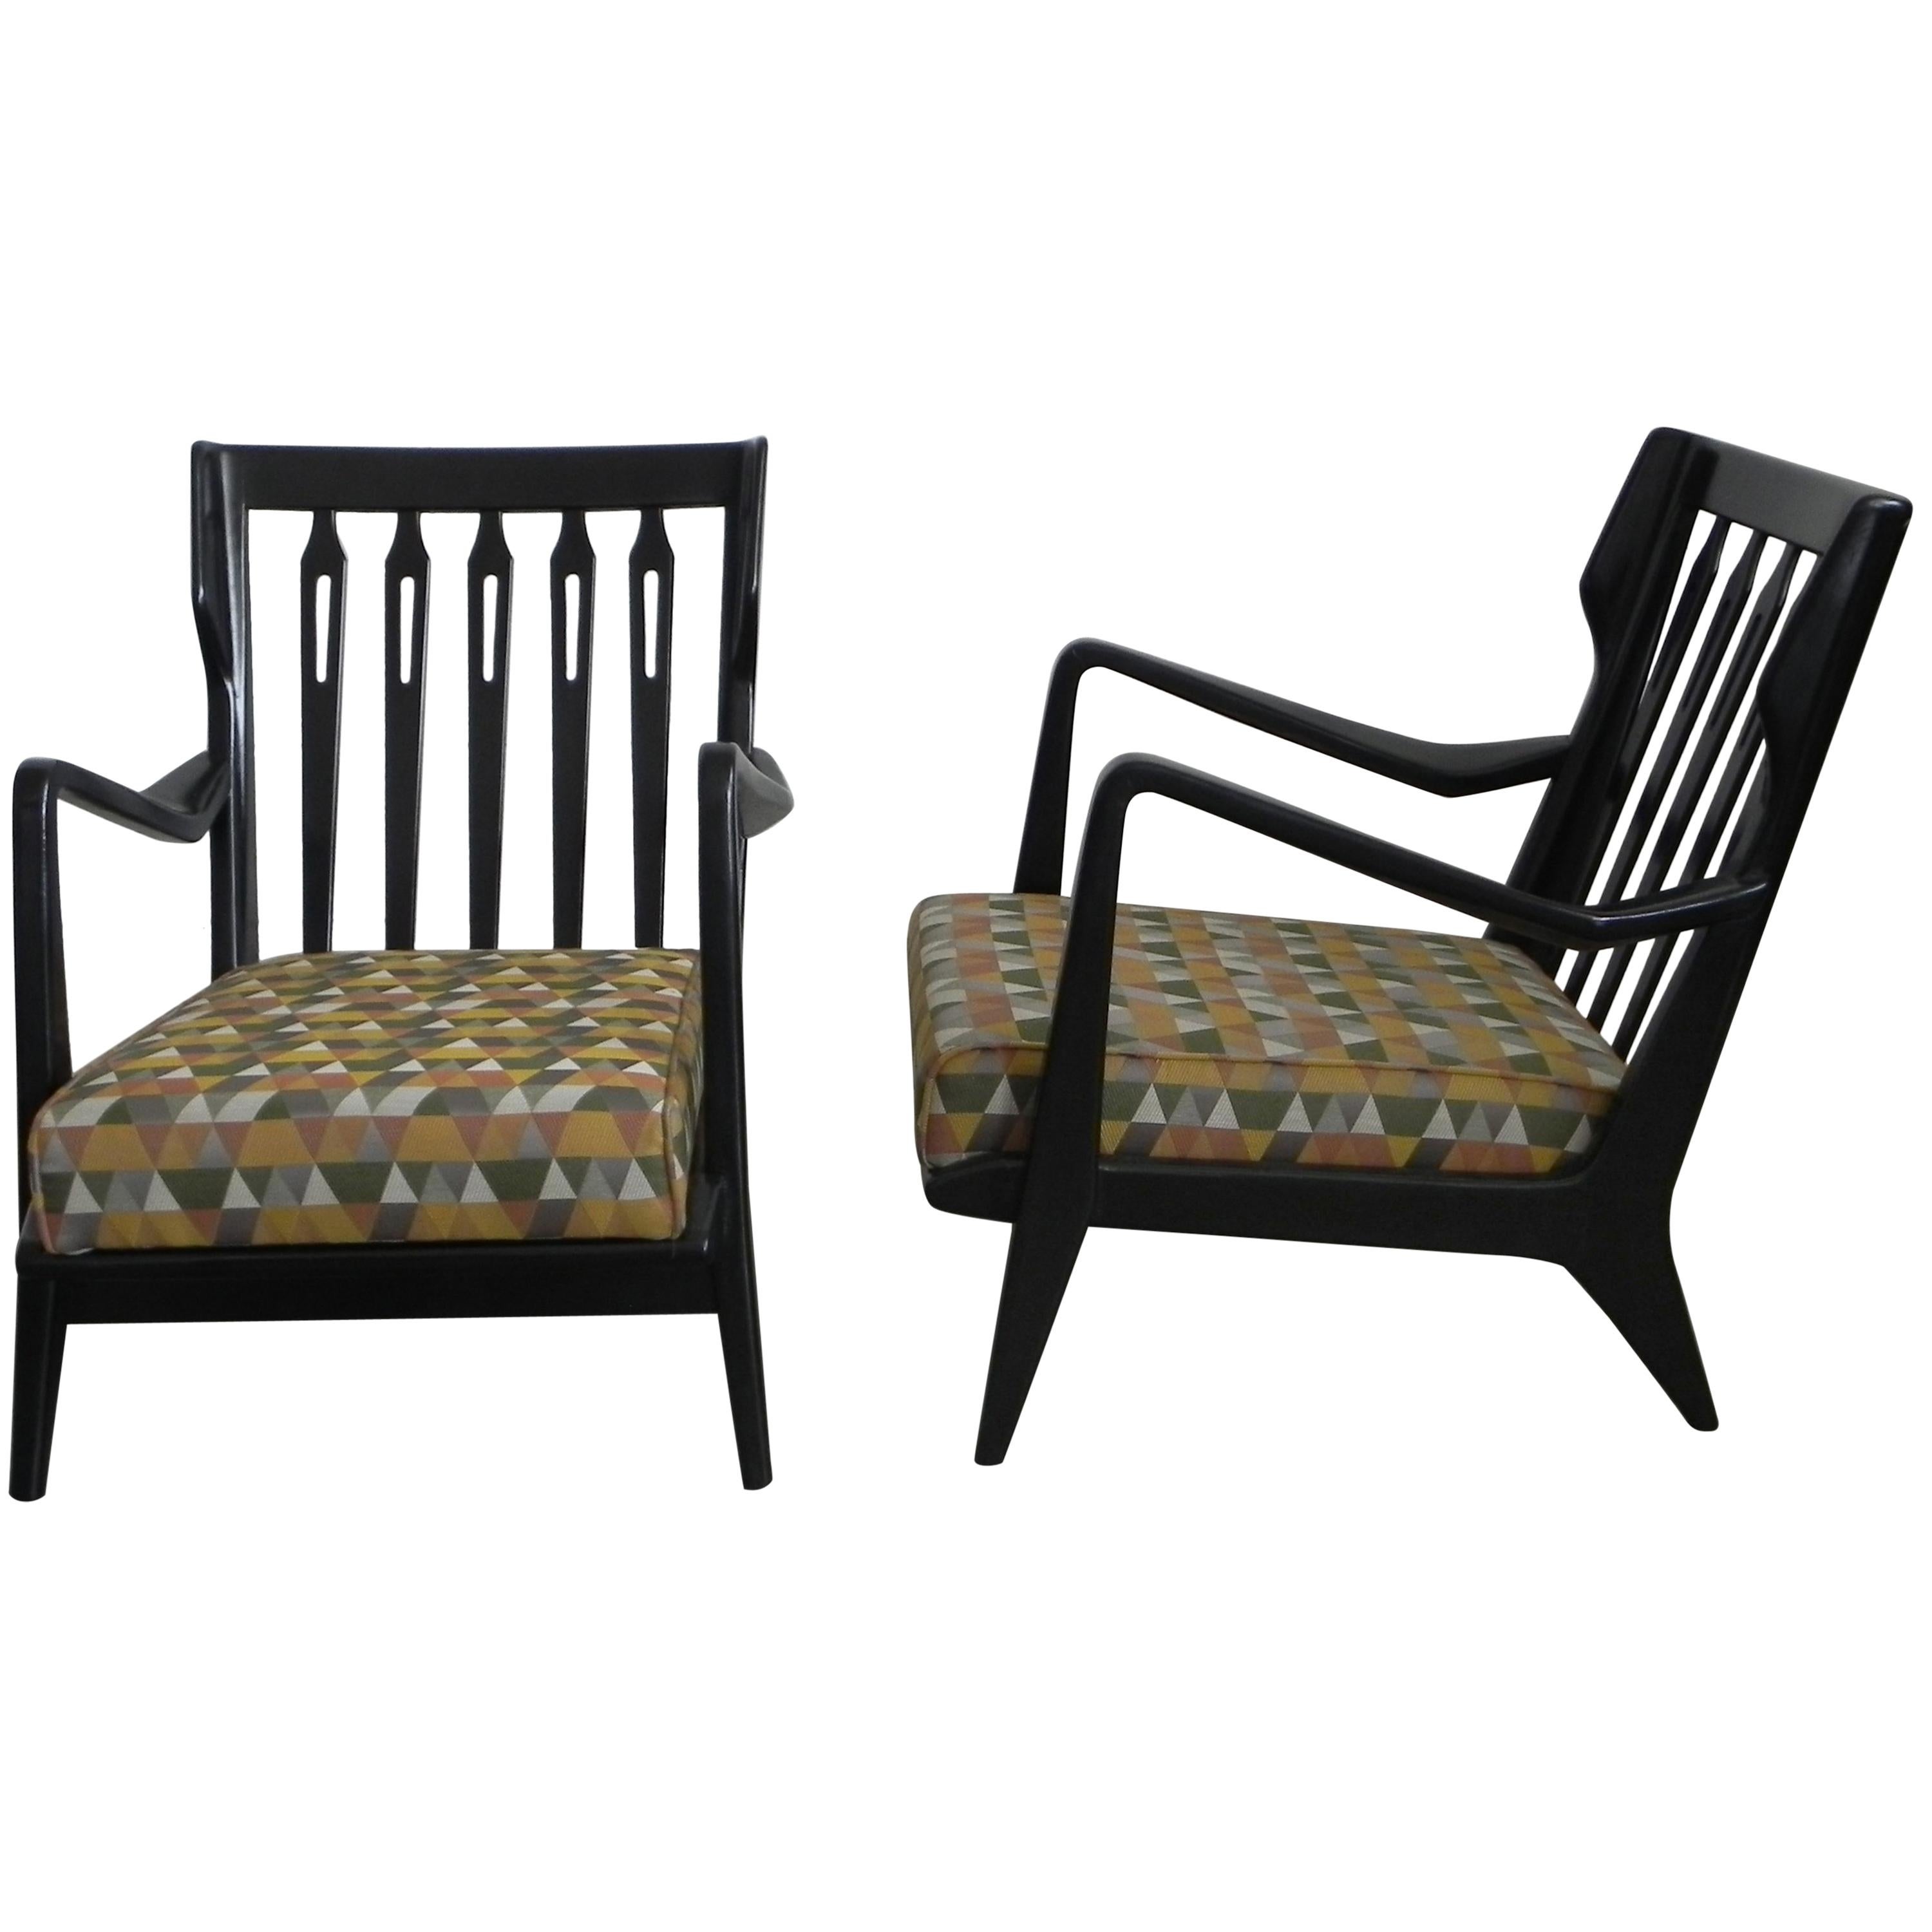 Pair of Gio Ponti Walnut Ebonized Chairs Model No 516 for Cassina, 1950s